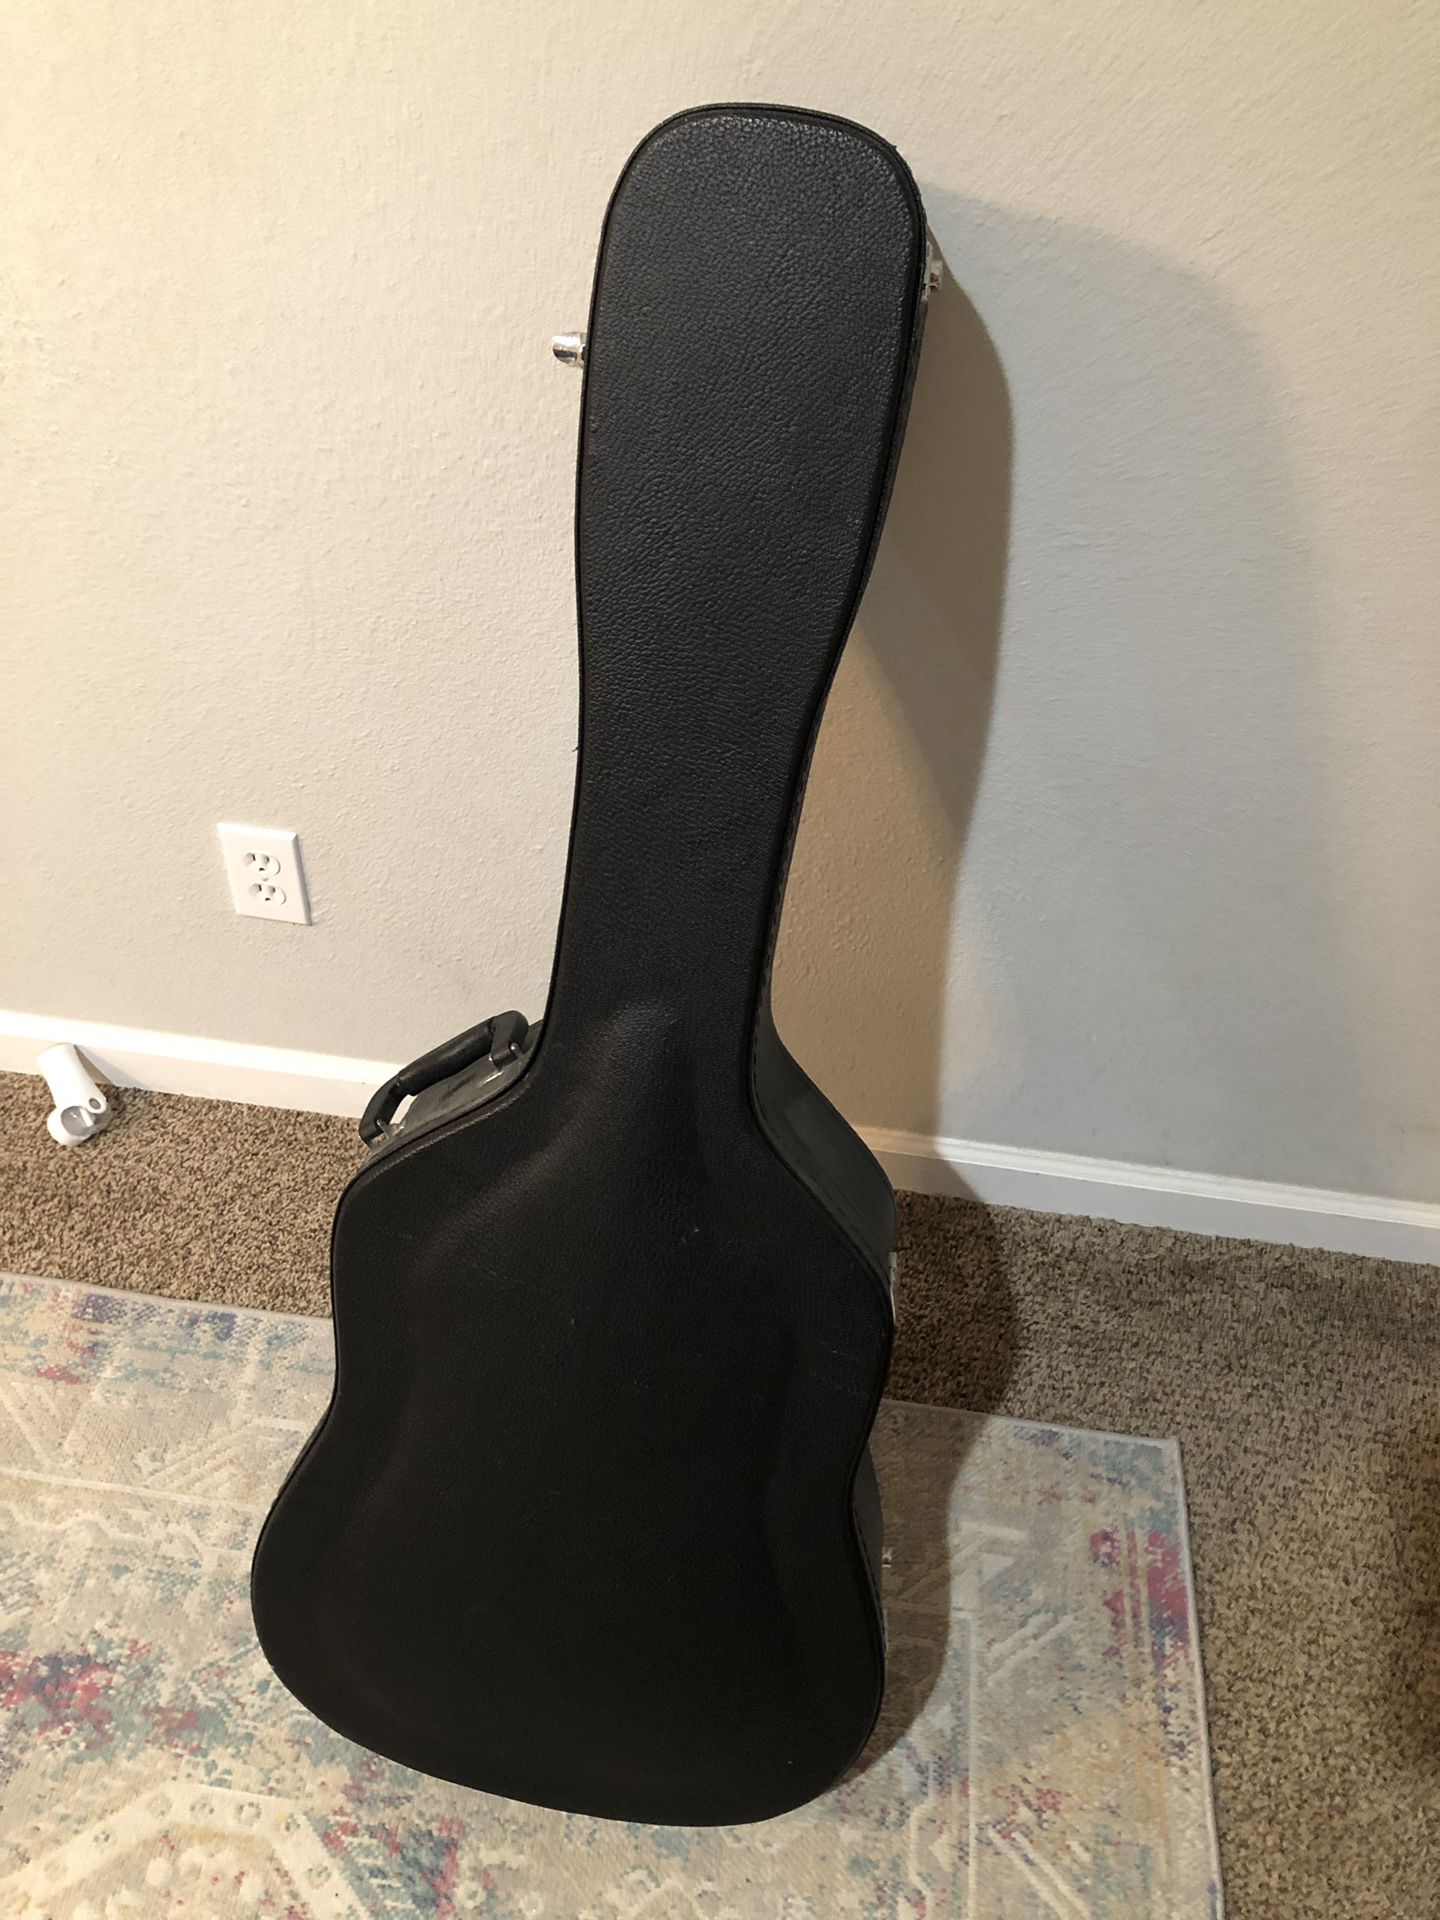 Fender acoustic guitar and gator hardshell case